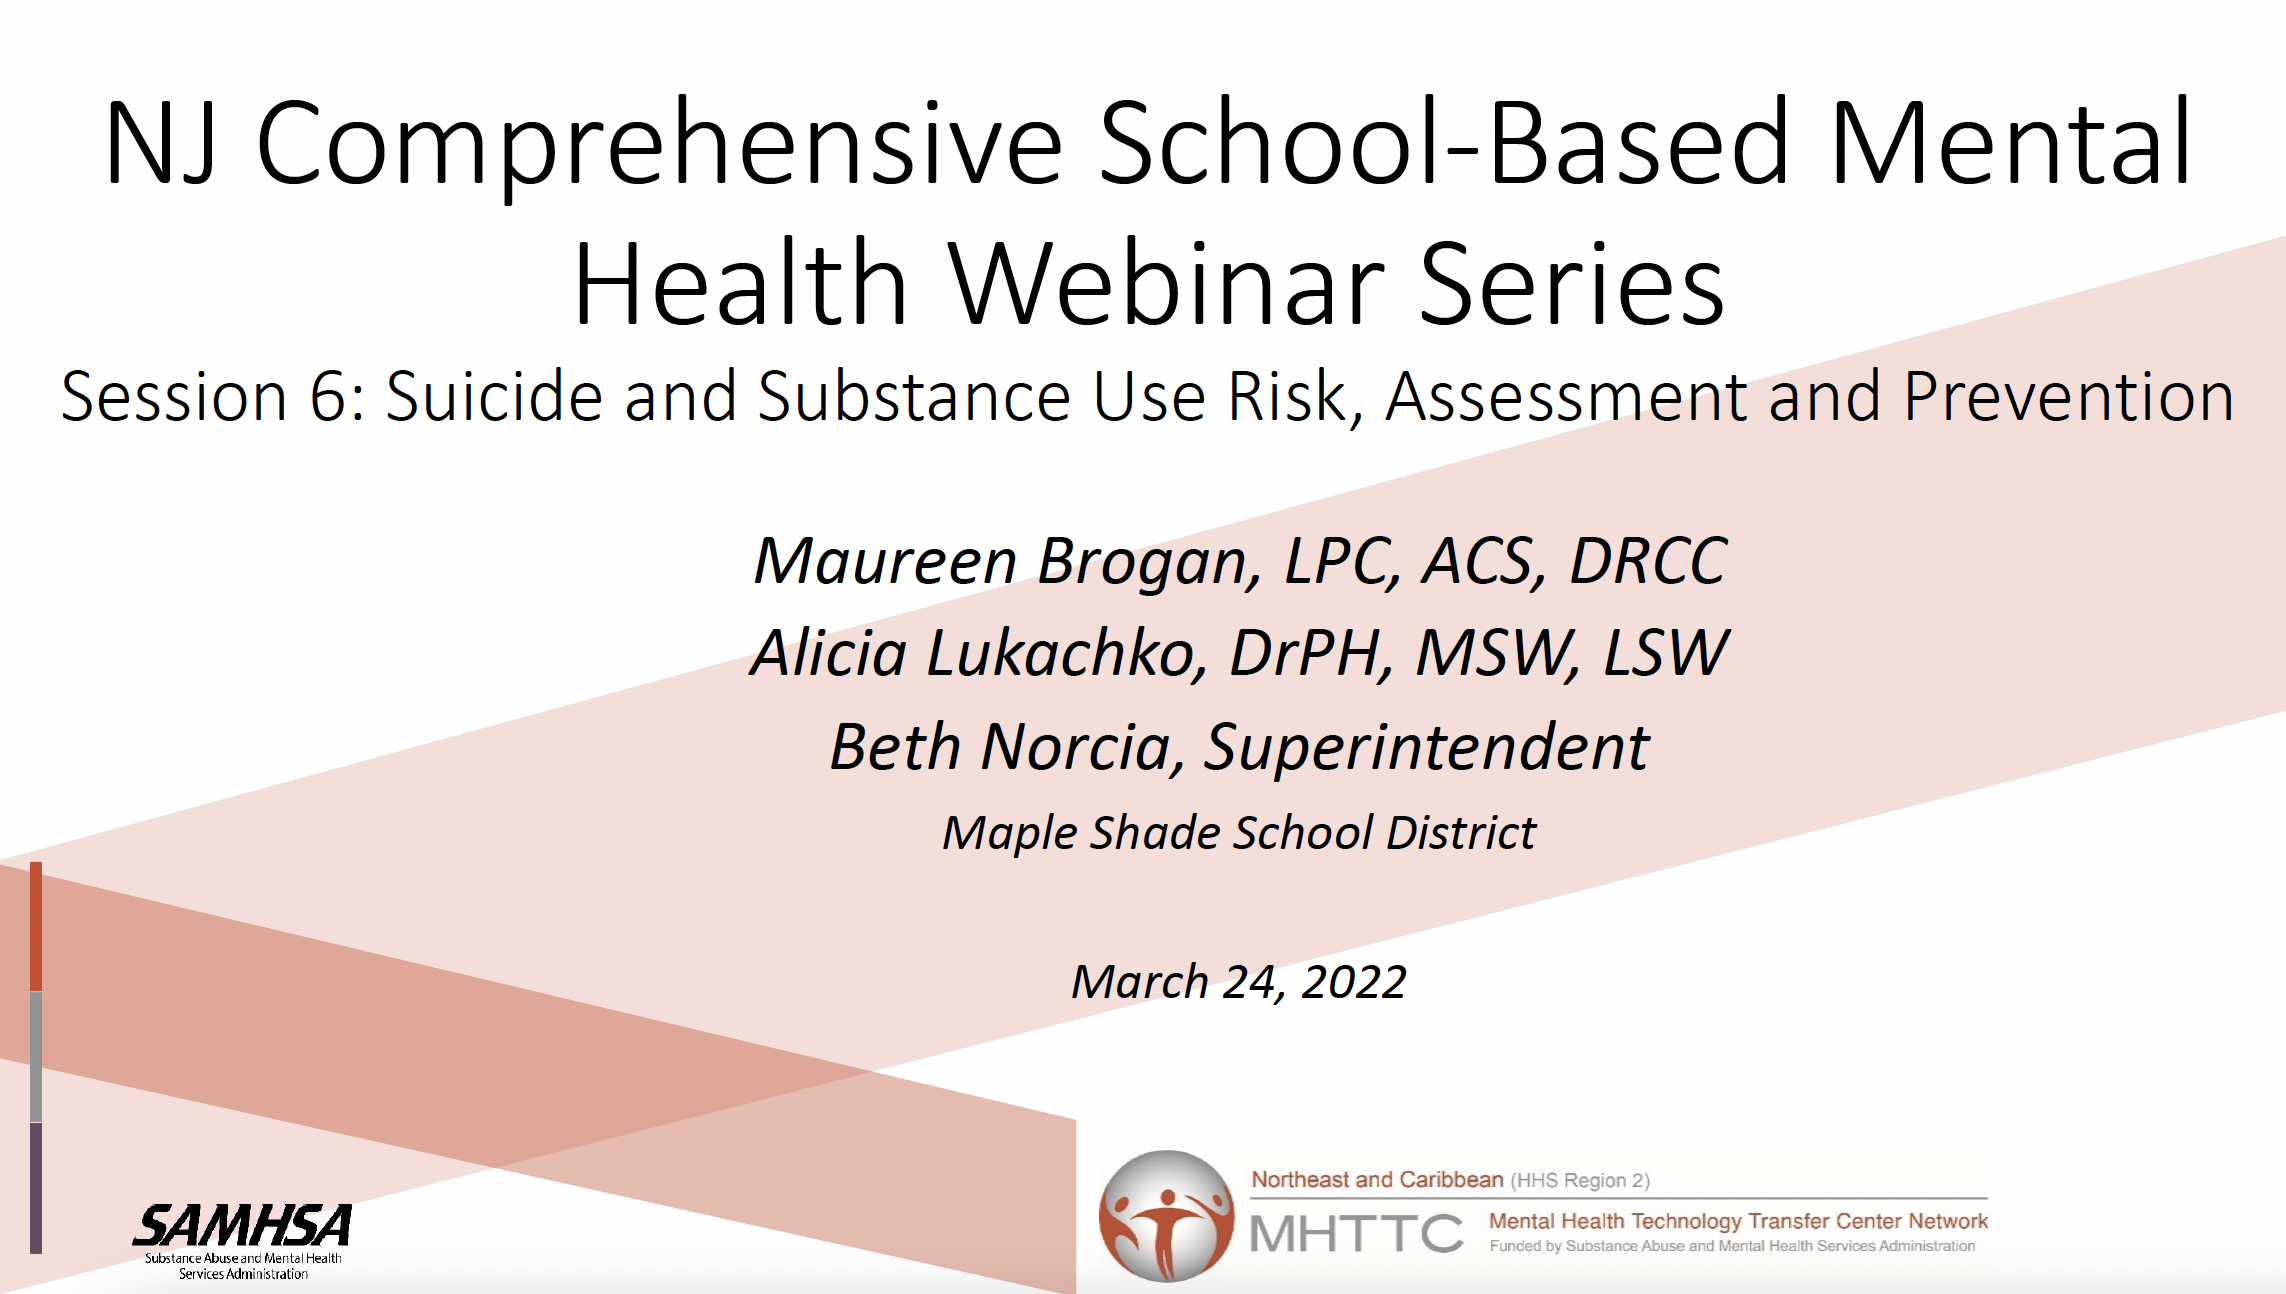 NJ Comprehensive School-Based Mental Health Webinar Series Session 6: Suicide and Substance Use Risk, Assessment and Prevention